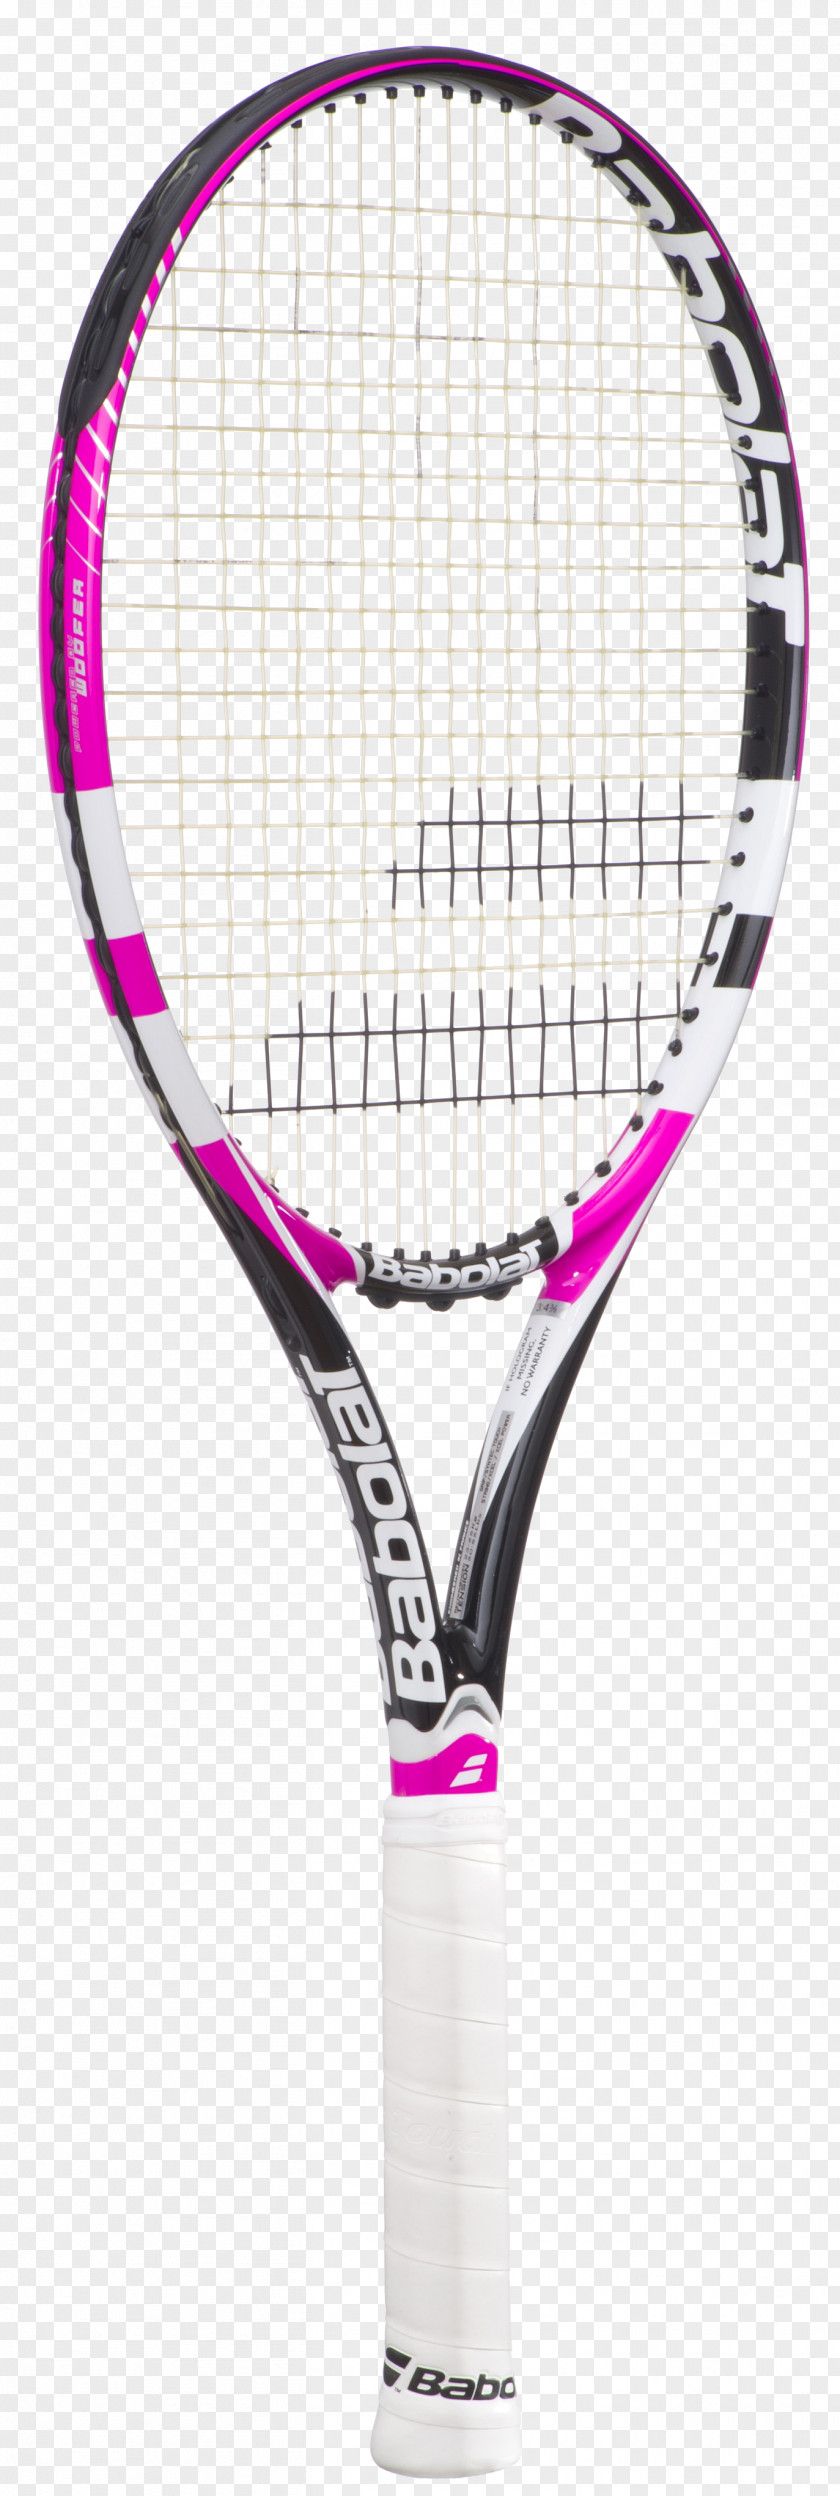 Dunlop Tennis Strings Babolat Racket Rakieta Tenisowa PNG